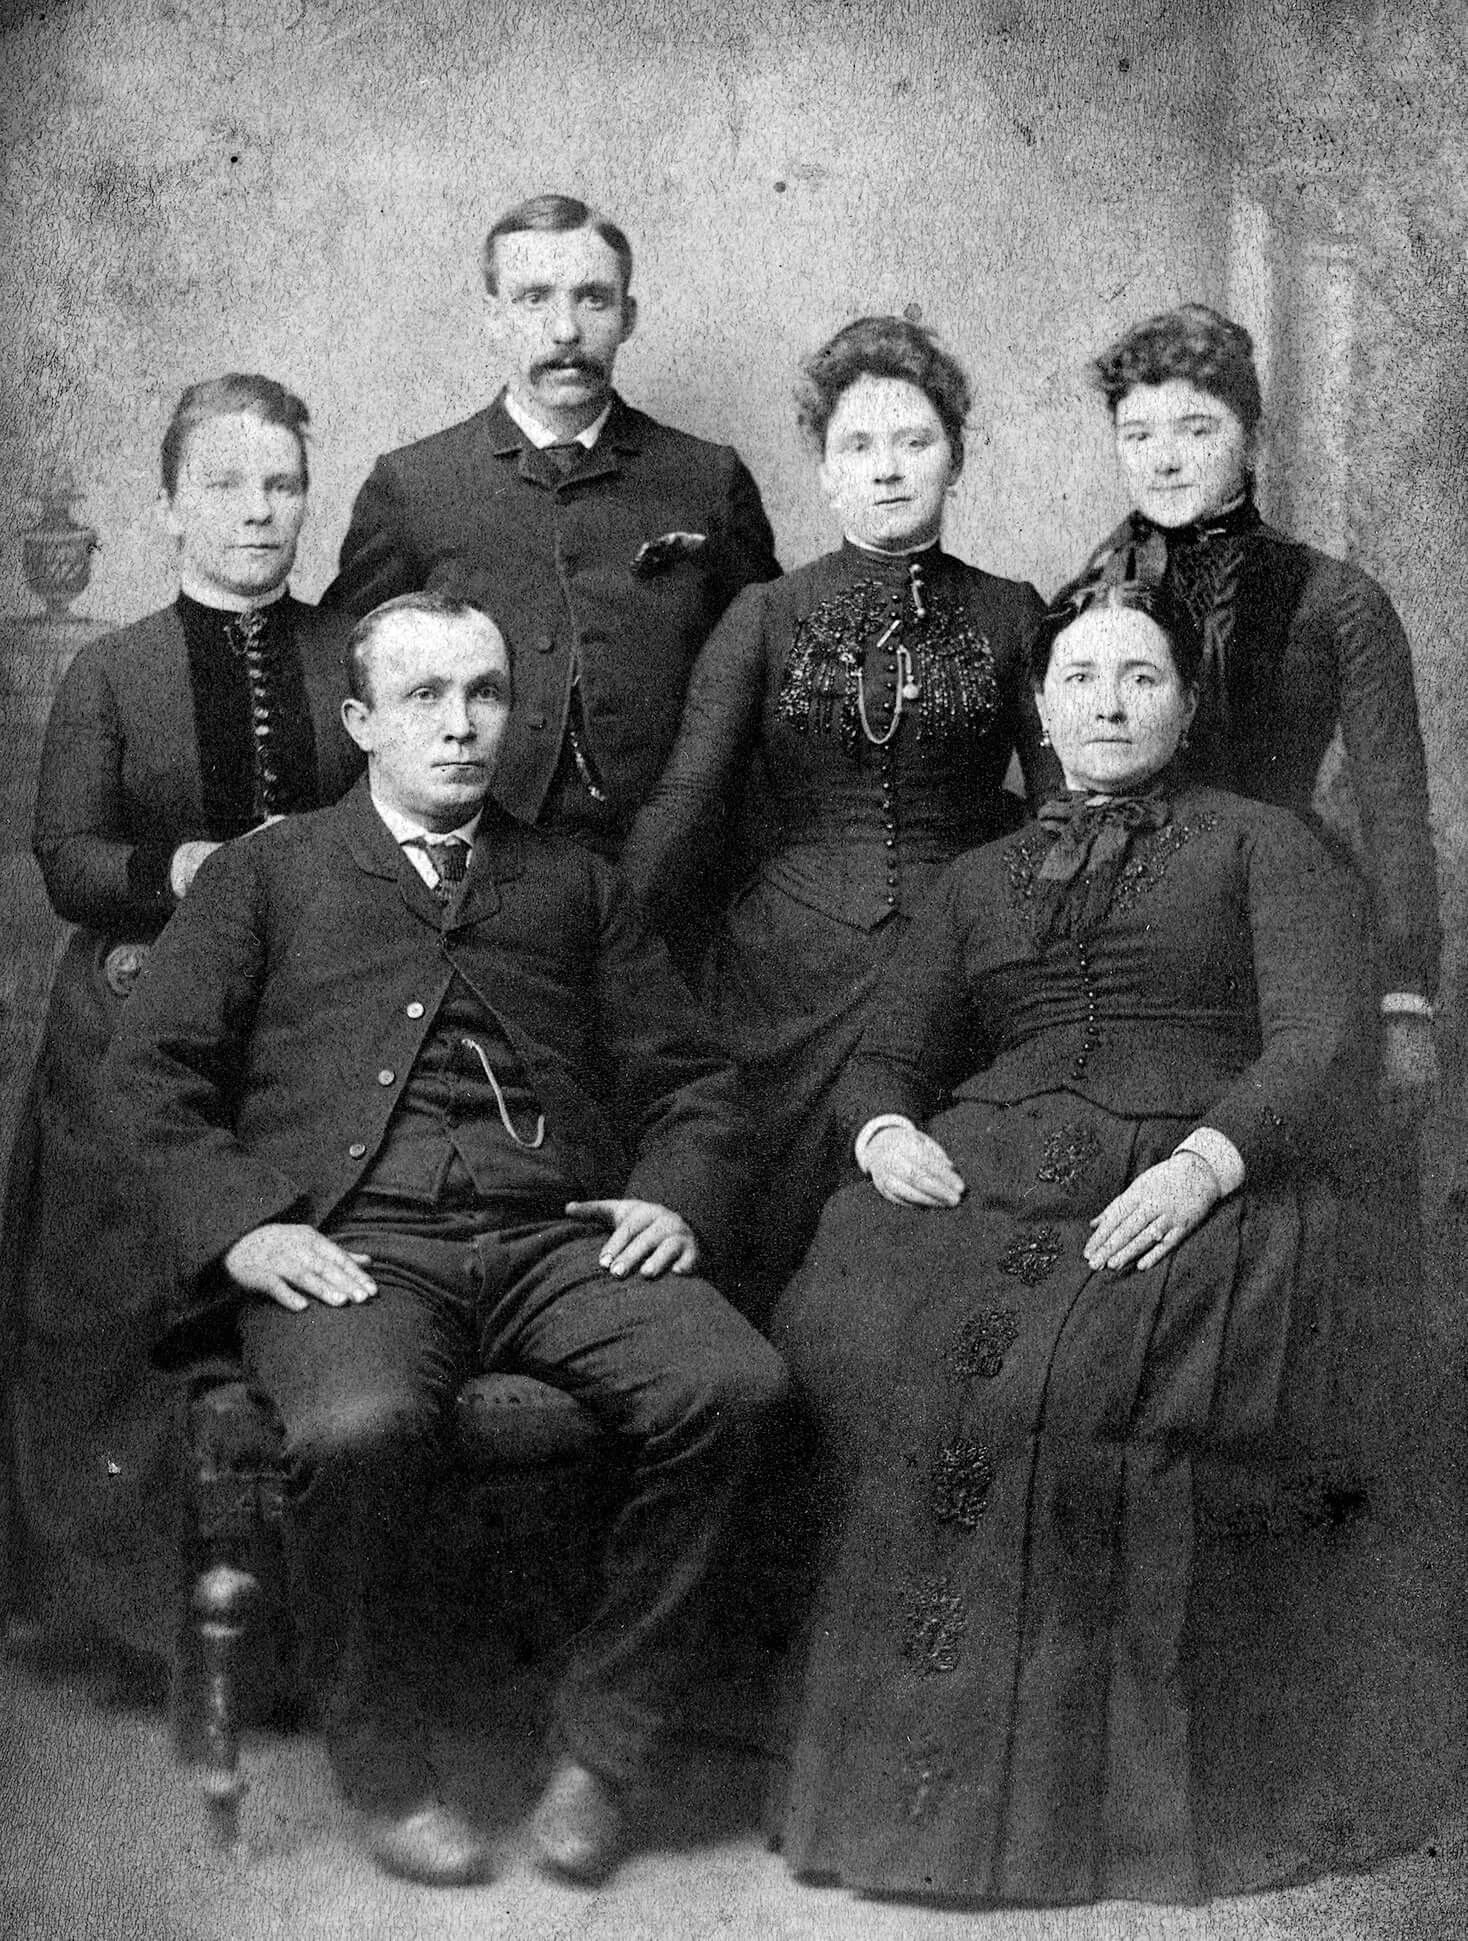 Photo of light-skinned men and women all wearing black.